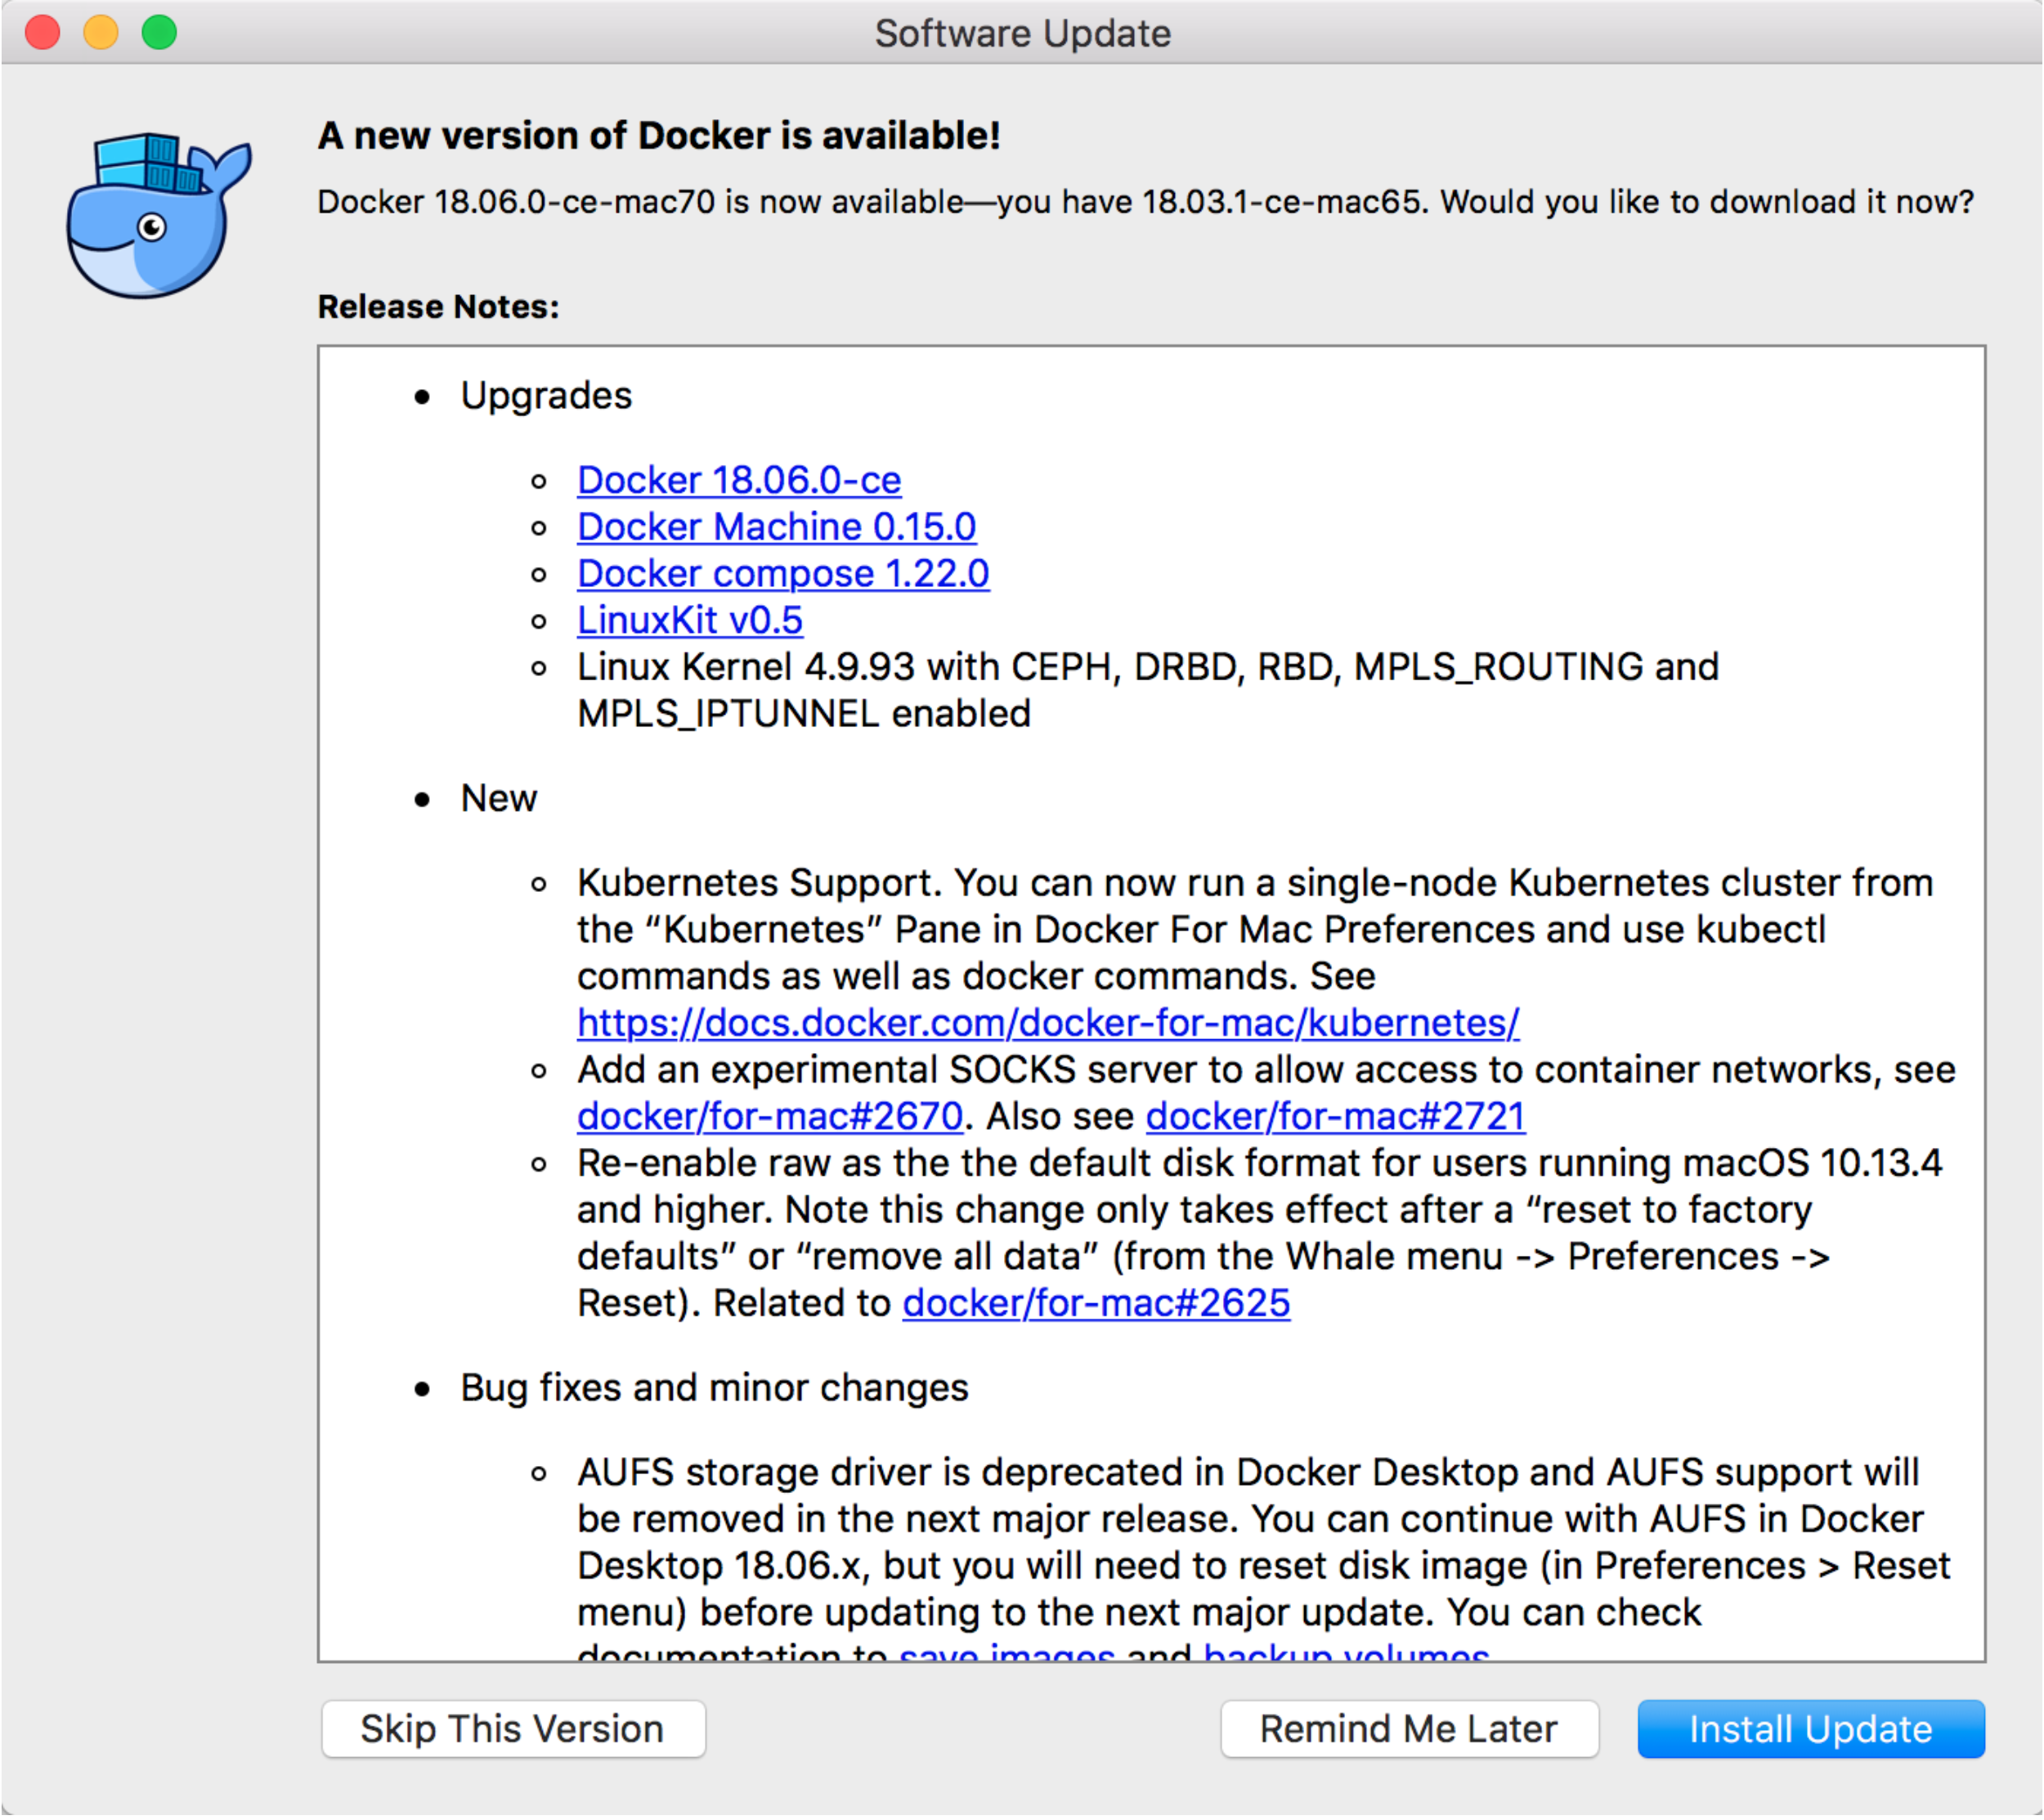 Image of Docker for Mac software update notification